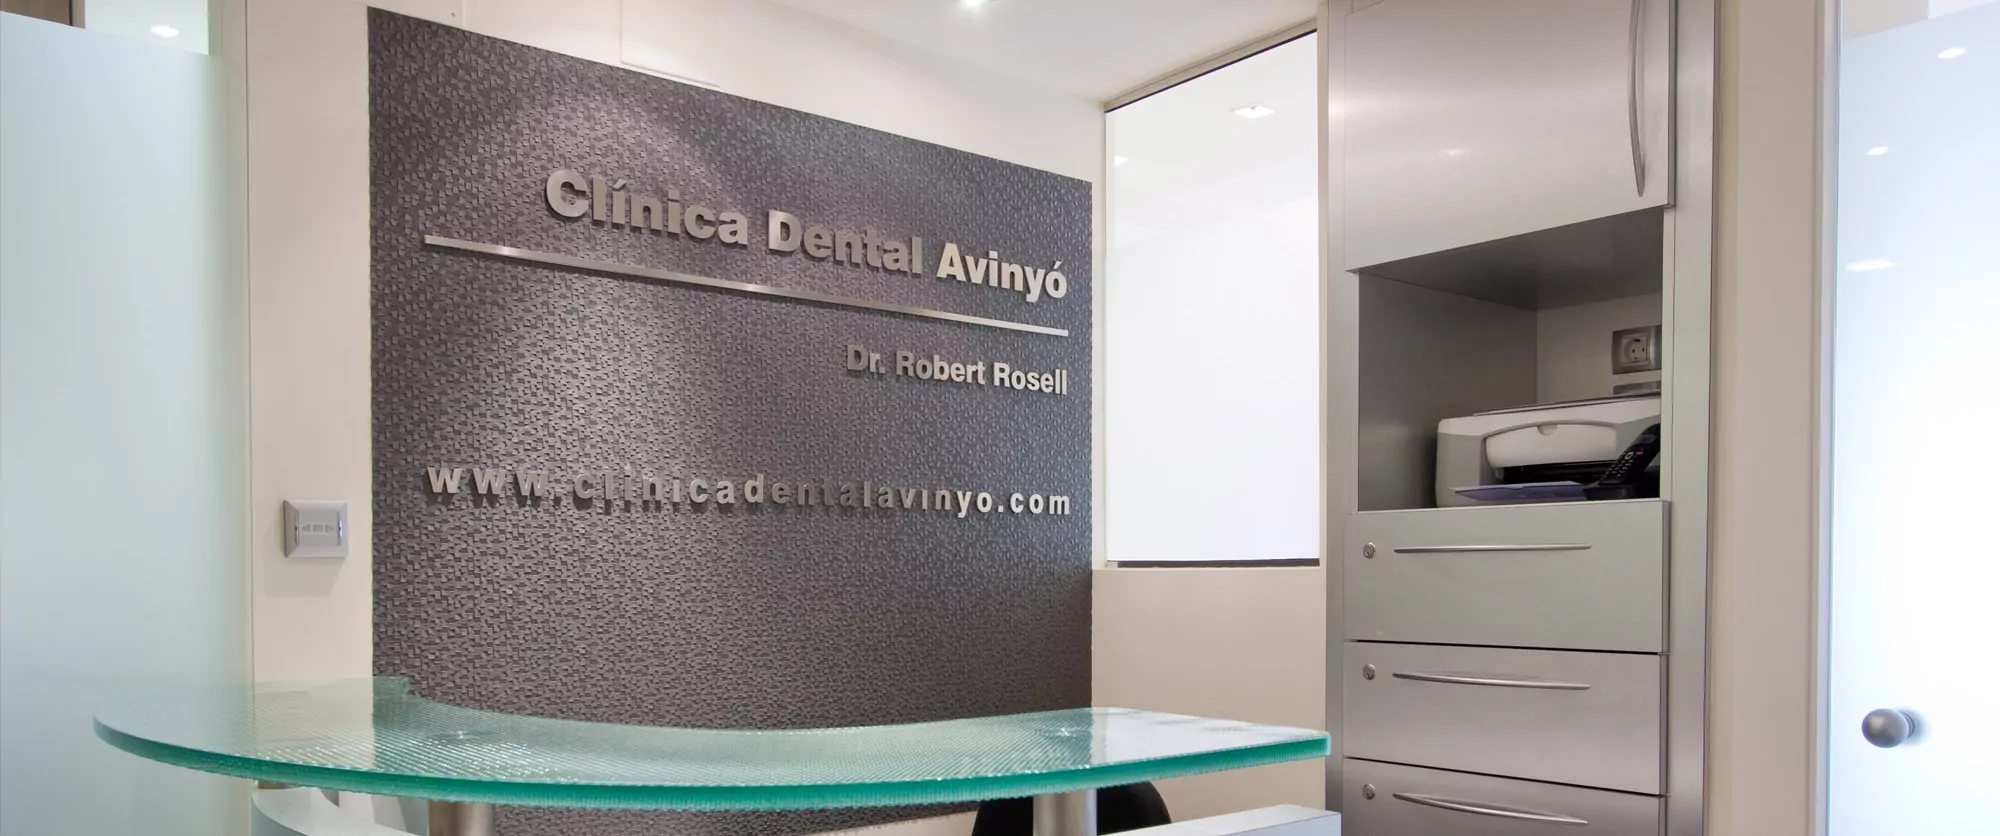 Consulta de la Clínica dental Avinyó